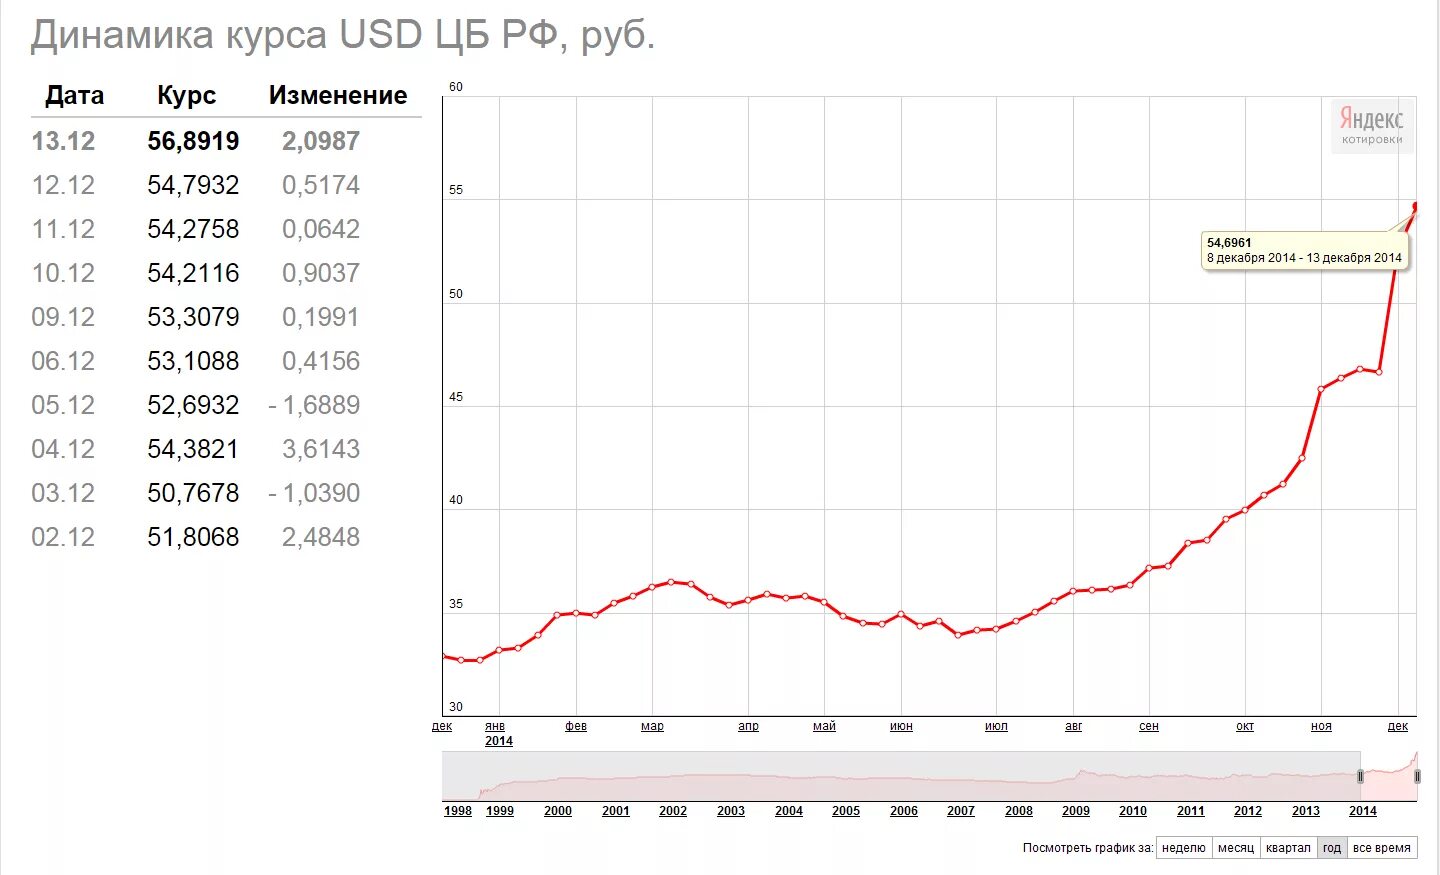 Какой был максимальный курс. Курс доллара к рублю график за 2014. График рубль доллар 2014 года. Курс рубля к доллару в 2014 году по месяцам таблица. Доллар рубль 2014-2015 график.